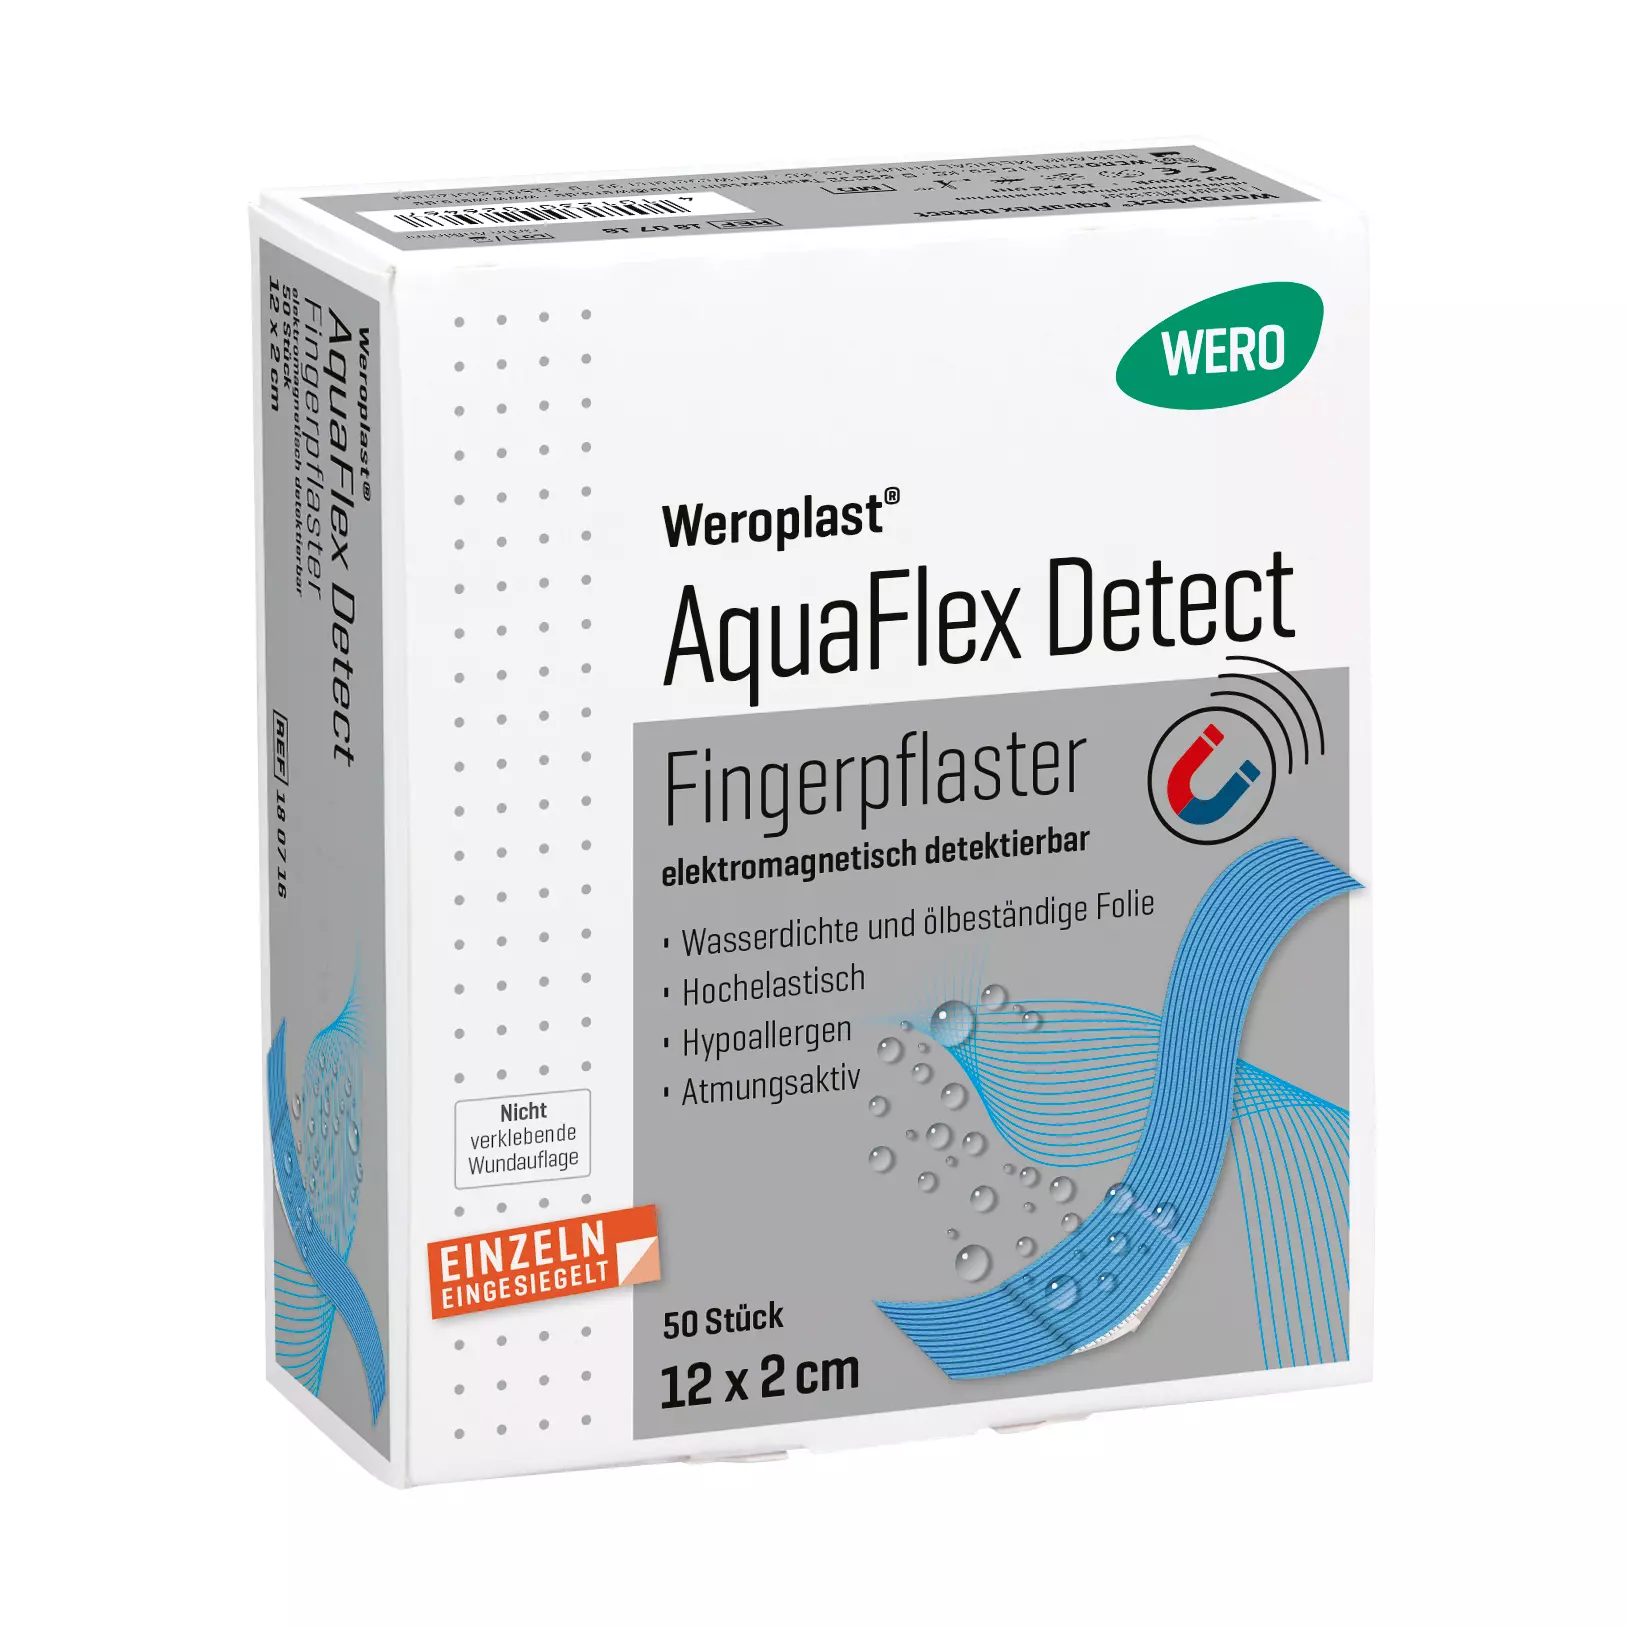 Weroplast® AquaFlex Detect Fingerpflaster - 2 cm, 12 cm